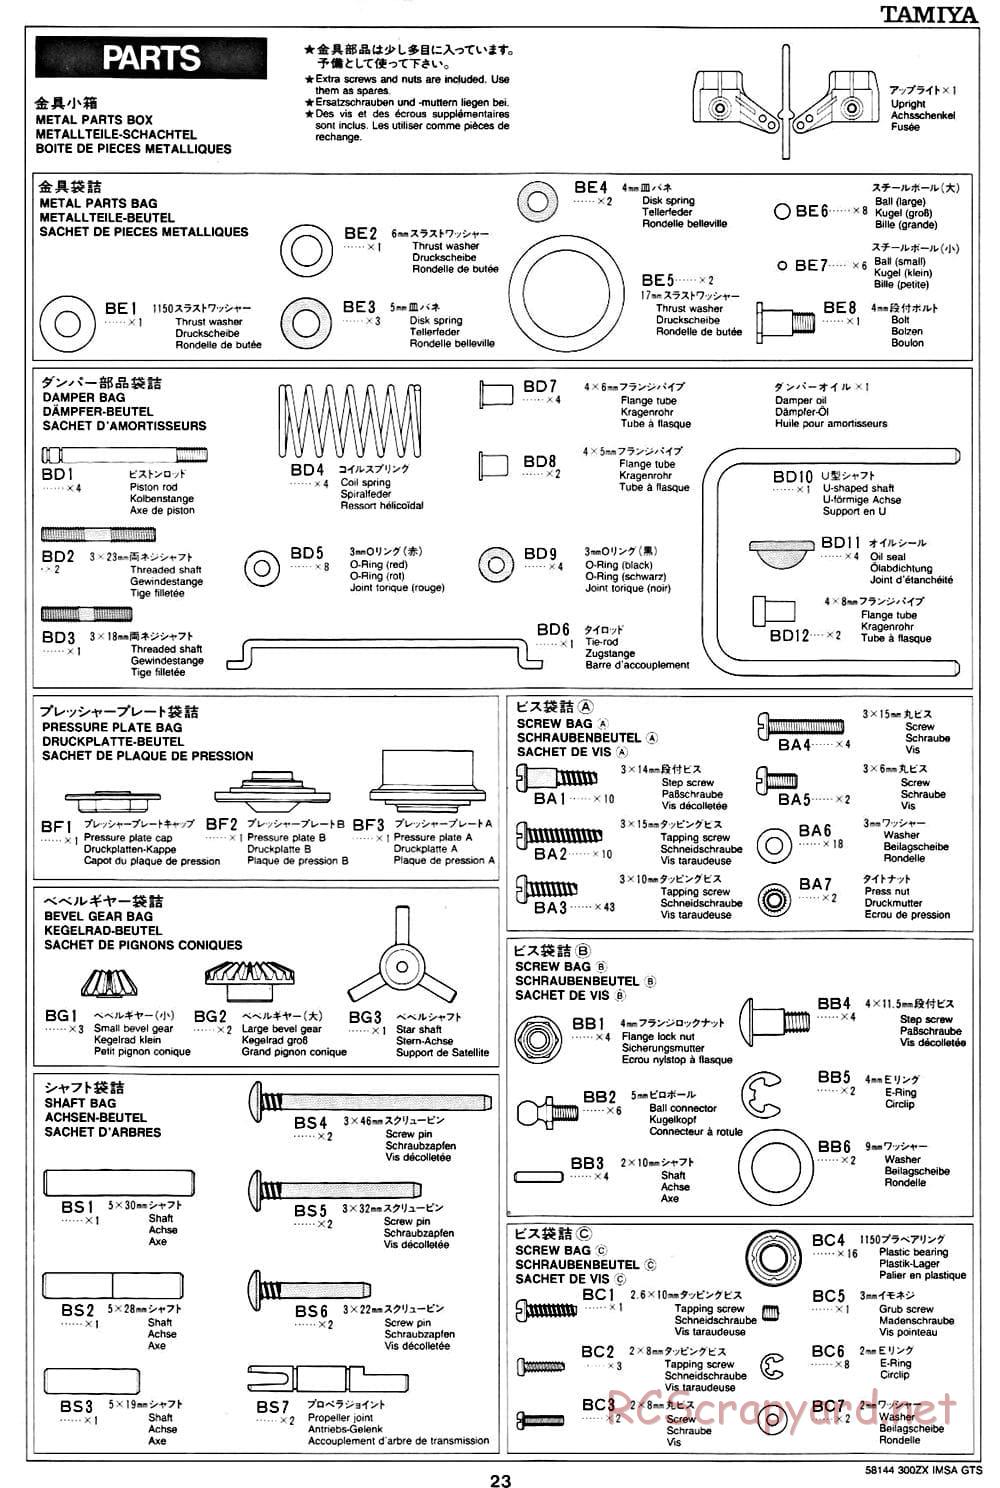 Tamiya - Nissan 300ZX IMSA-GTS - TA-02W Chassis - Manual - Page 23